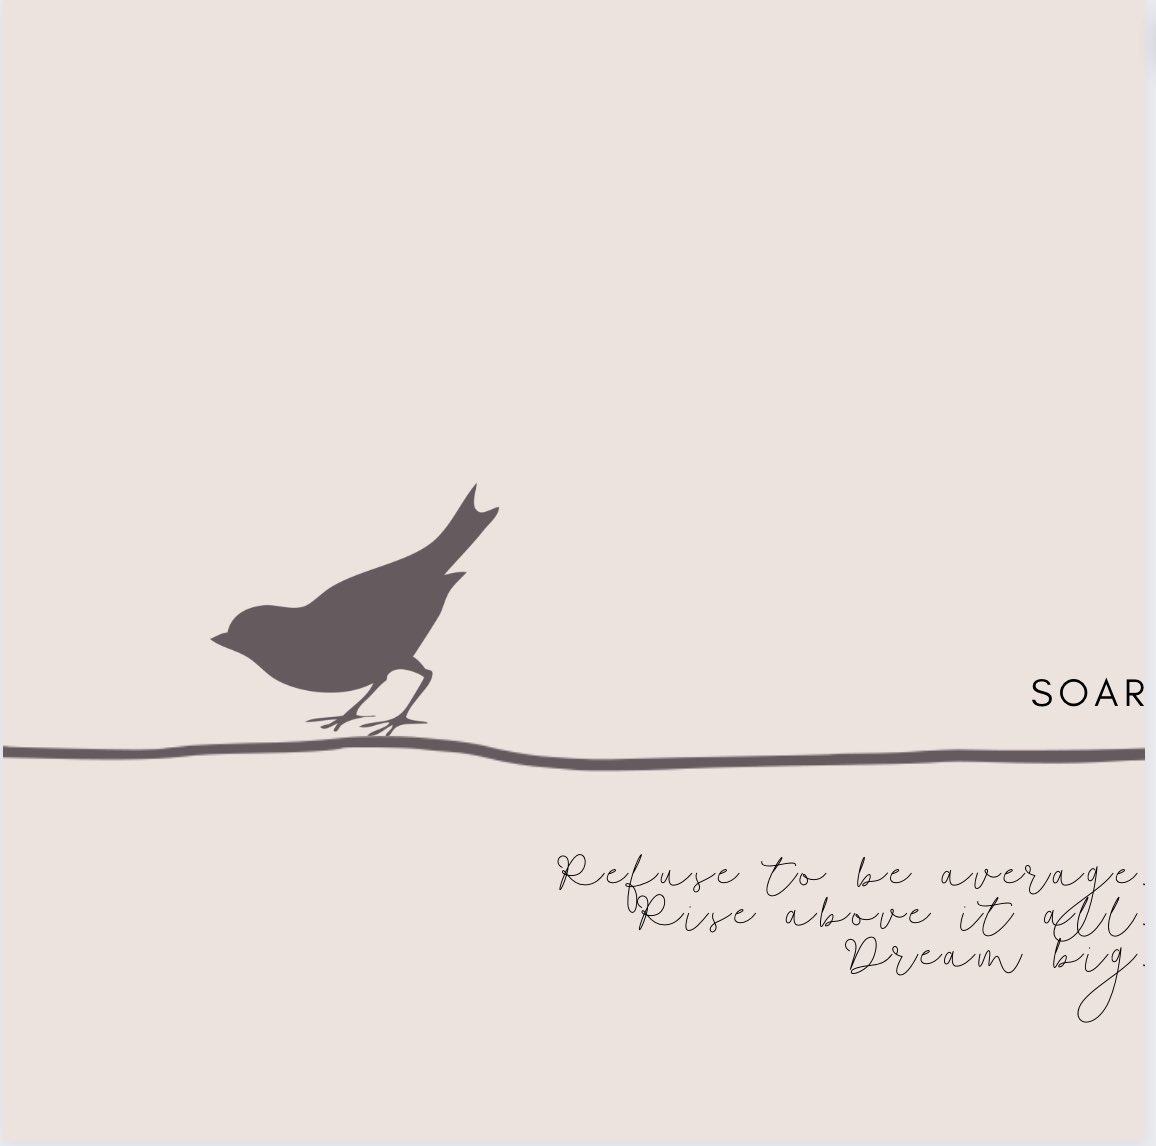 This year I will #soar. 
#JoyfulLeaders 
#oneword2023